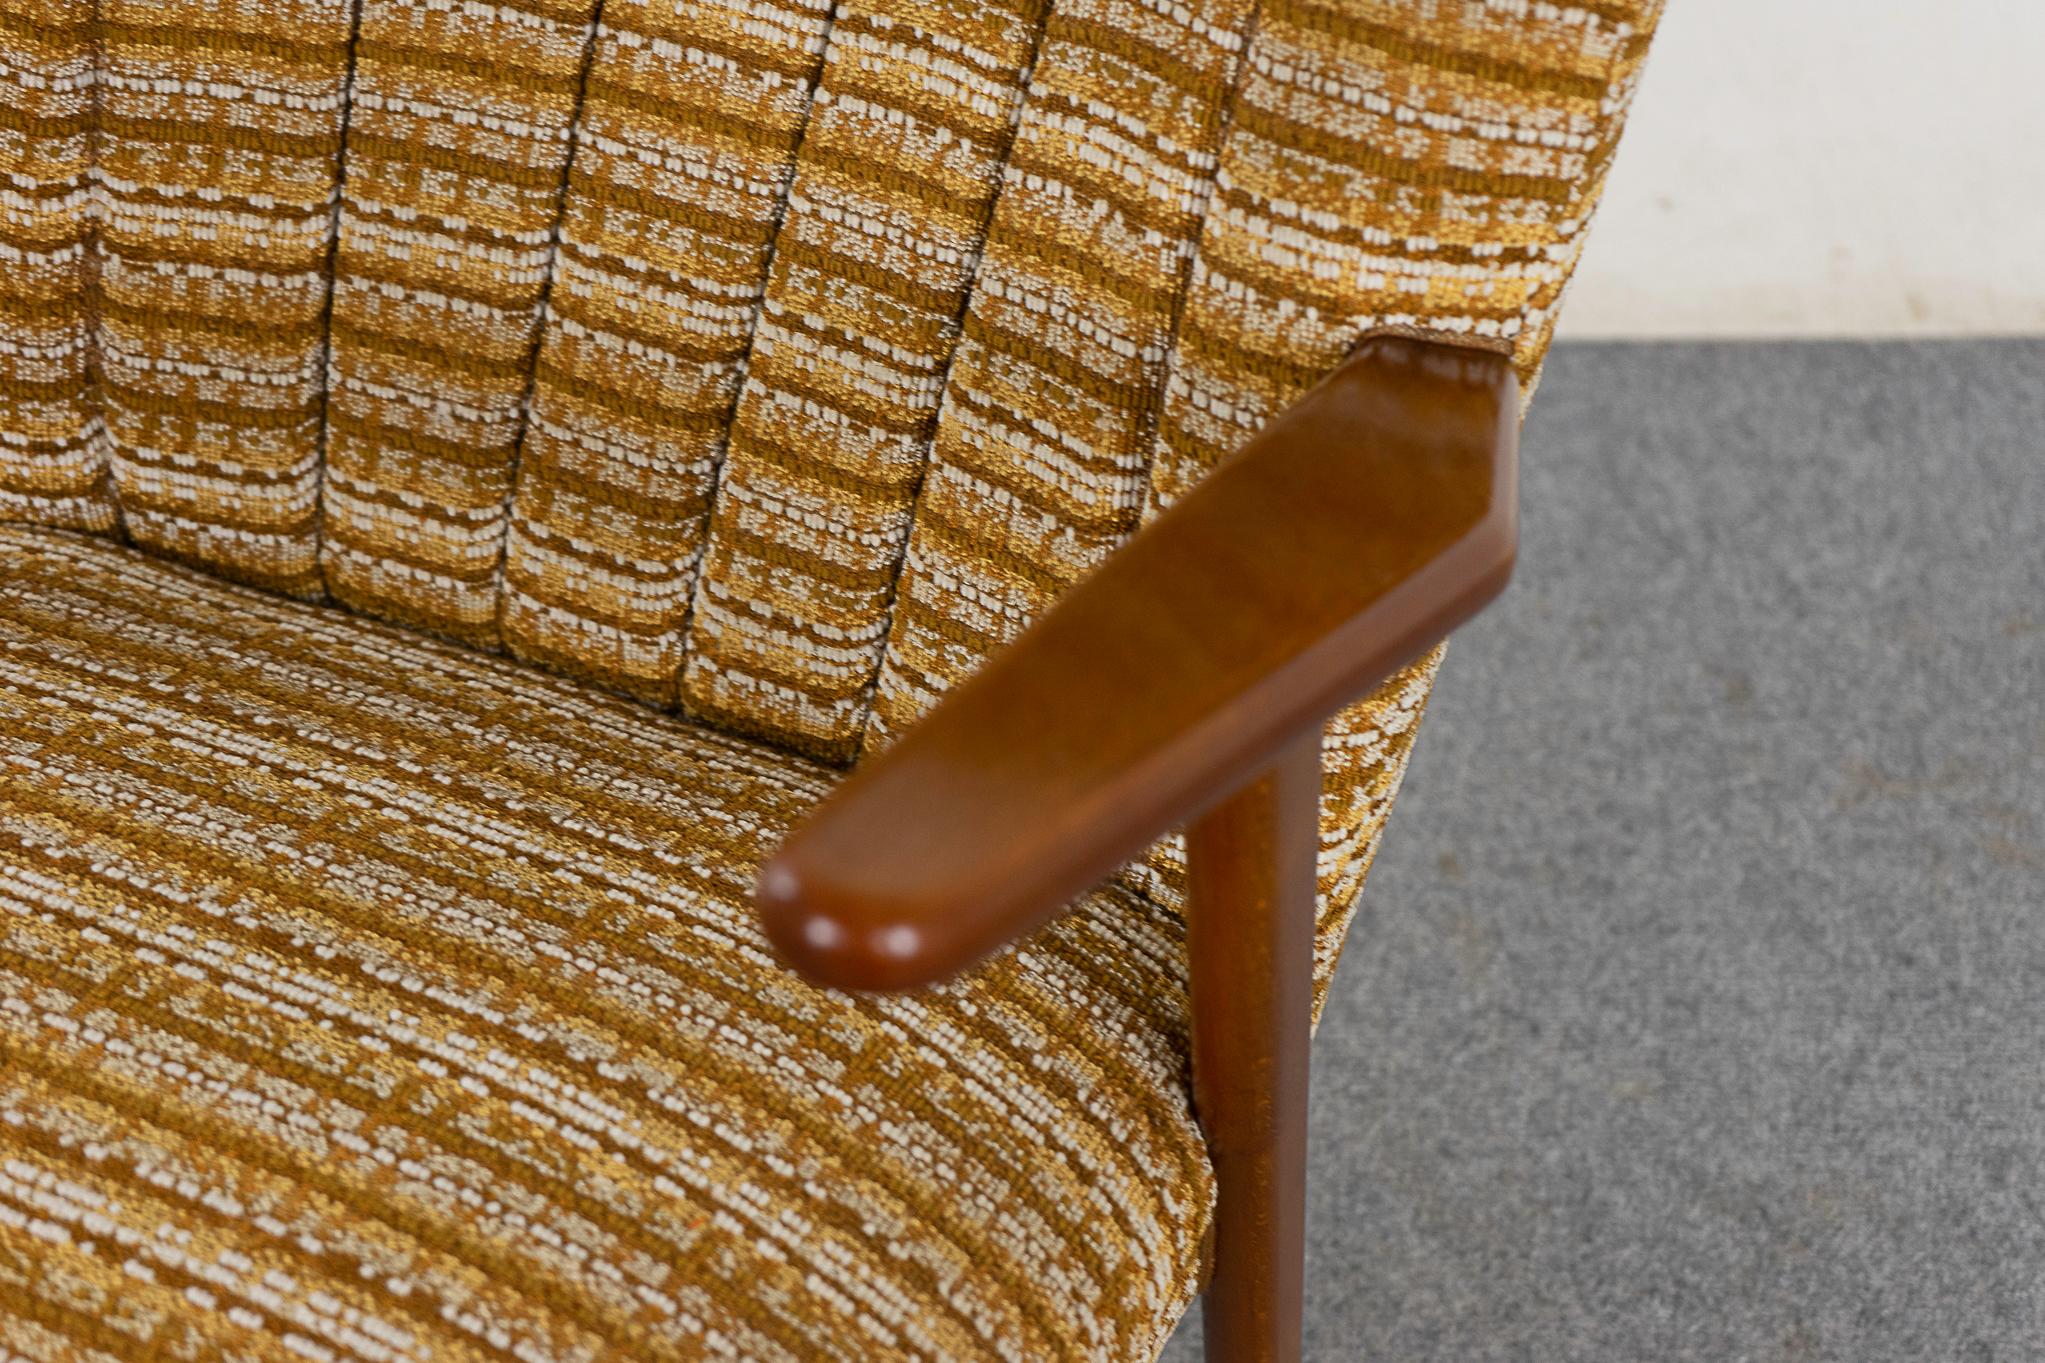 Danish Mid-Century Modern Beech Lounge Chair For Sale